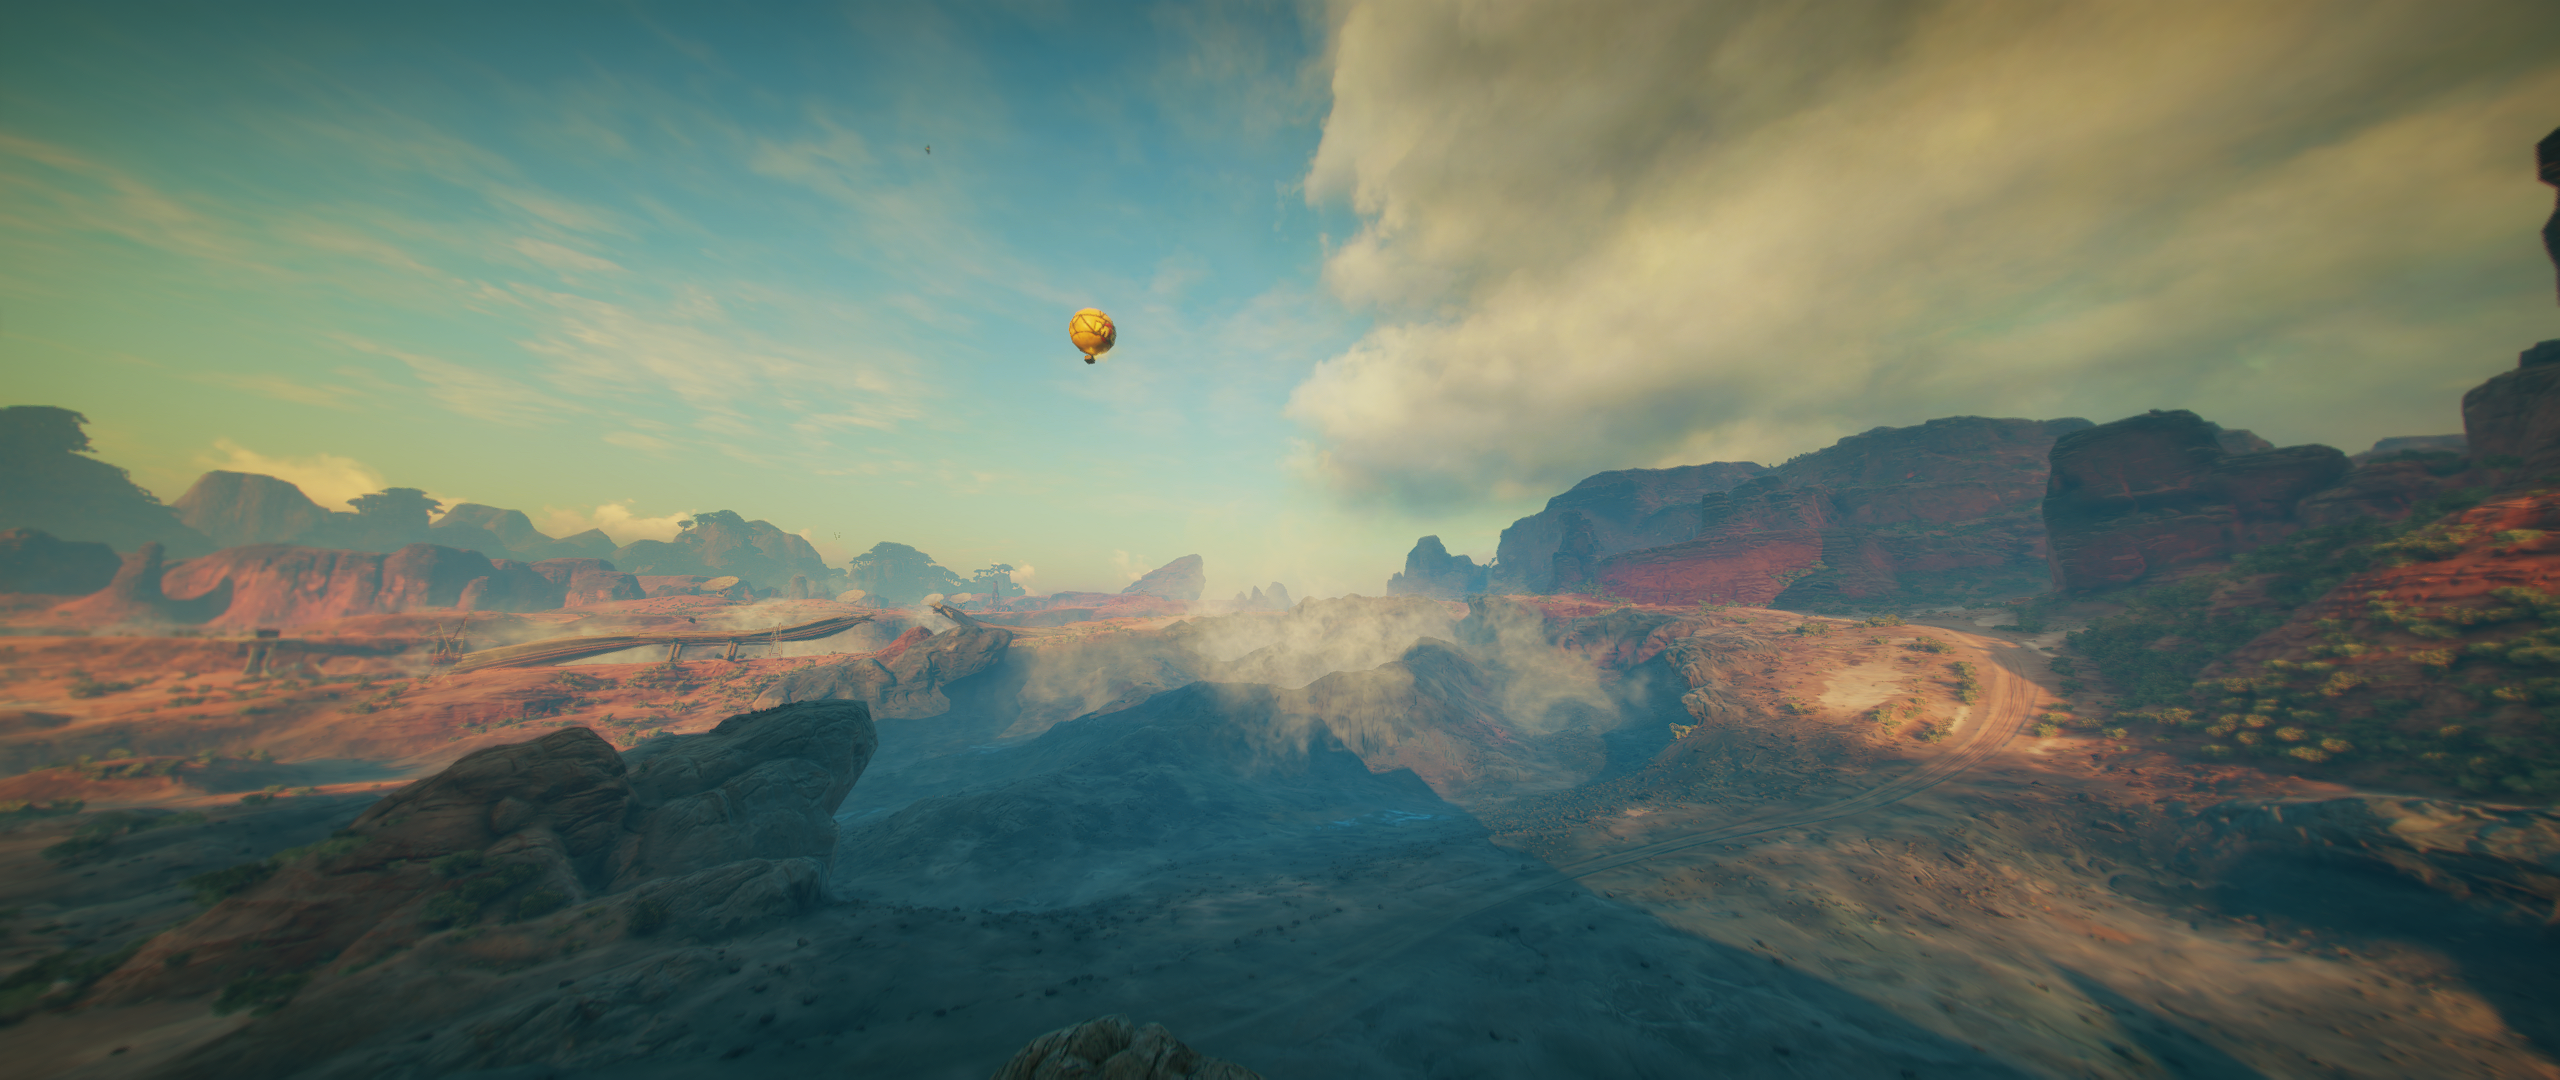 Rage 2 Video Game Art PC Gaming Video Games Hot Air Balloons Desert Screen Shot 2560x1080